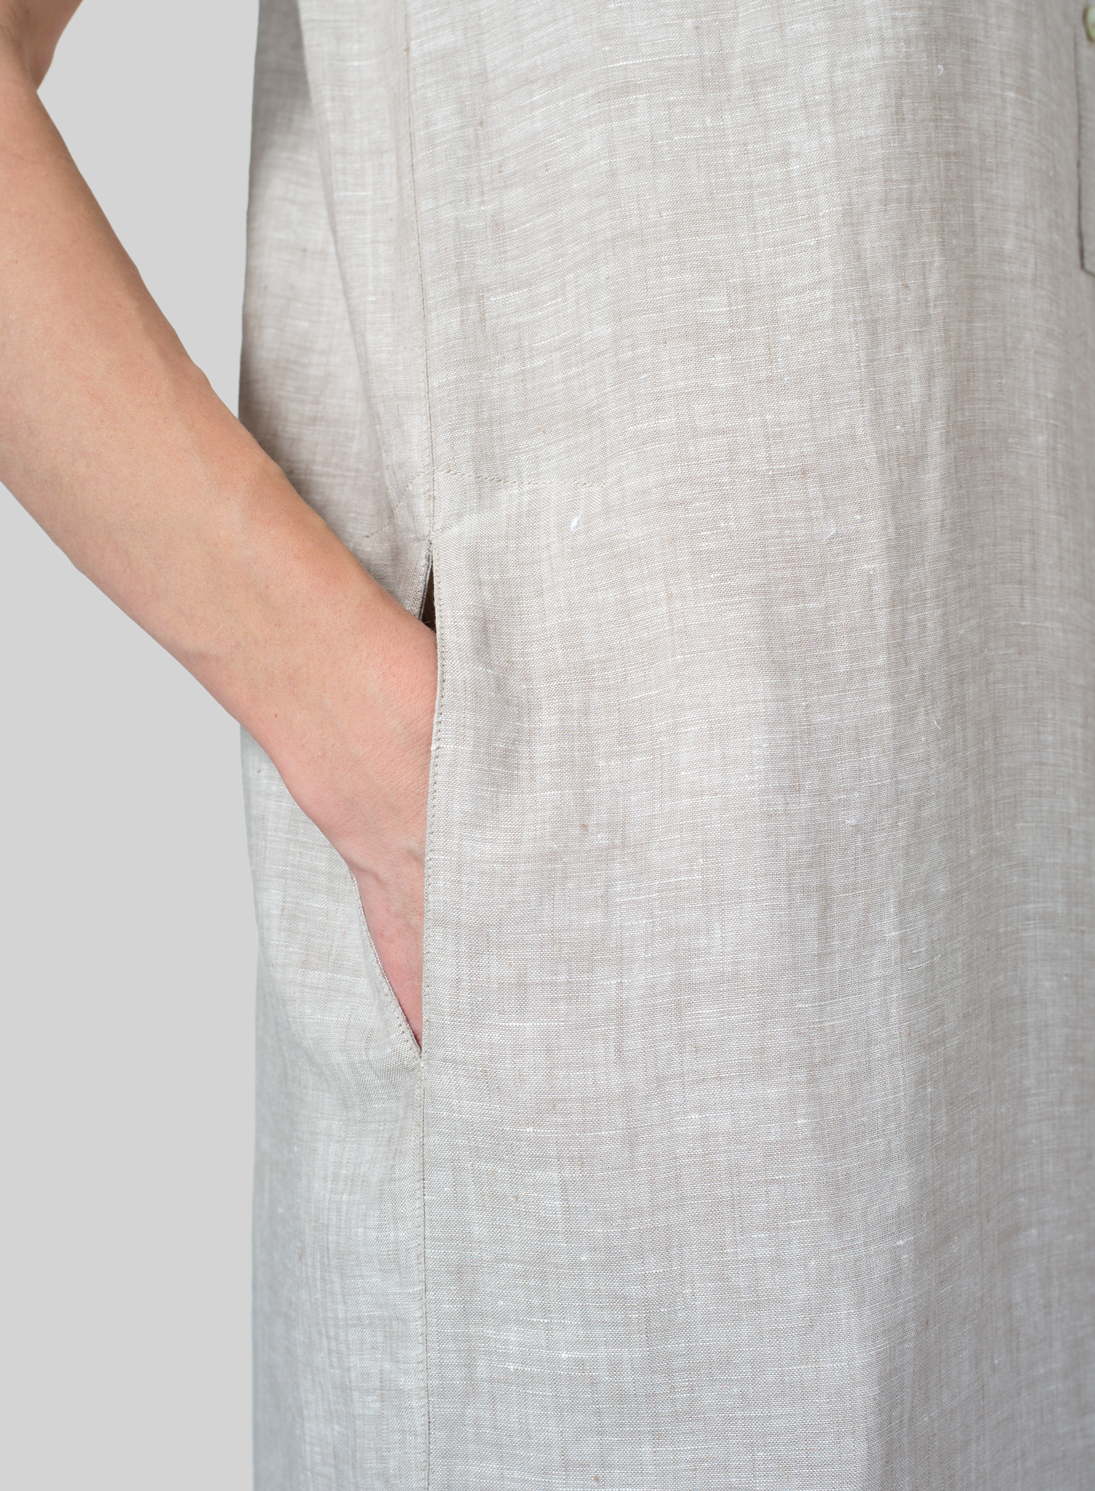 Gray Linen Slip On Dress Set - Plus Size